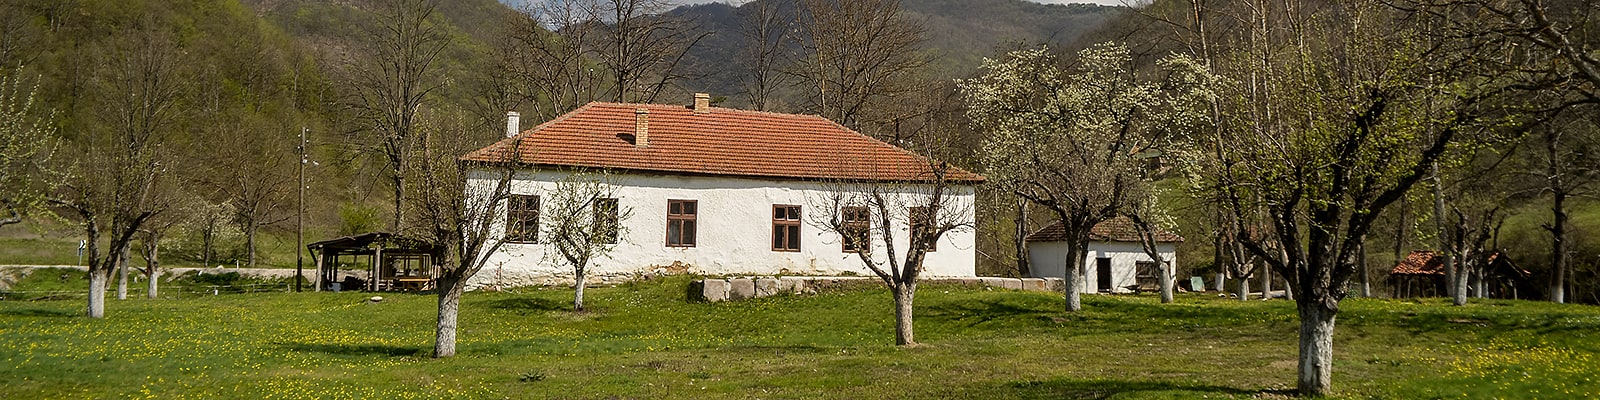 Balta Berilovac, Serbia